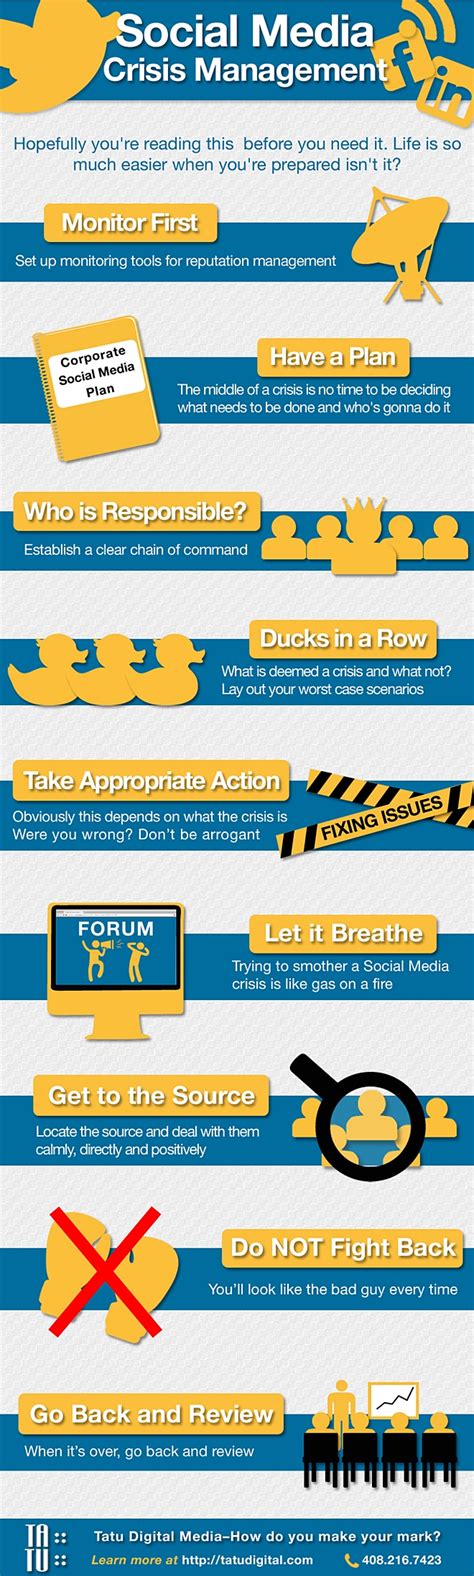 managing a social media crisis [infographic]